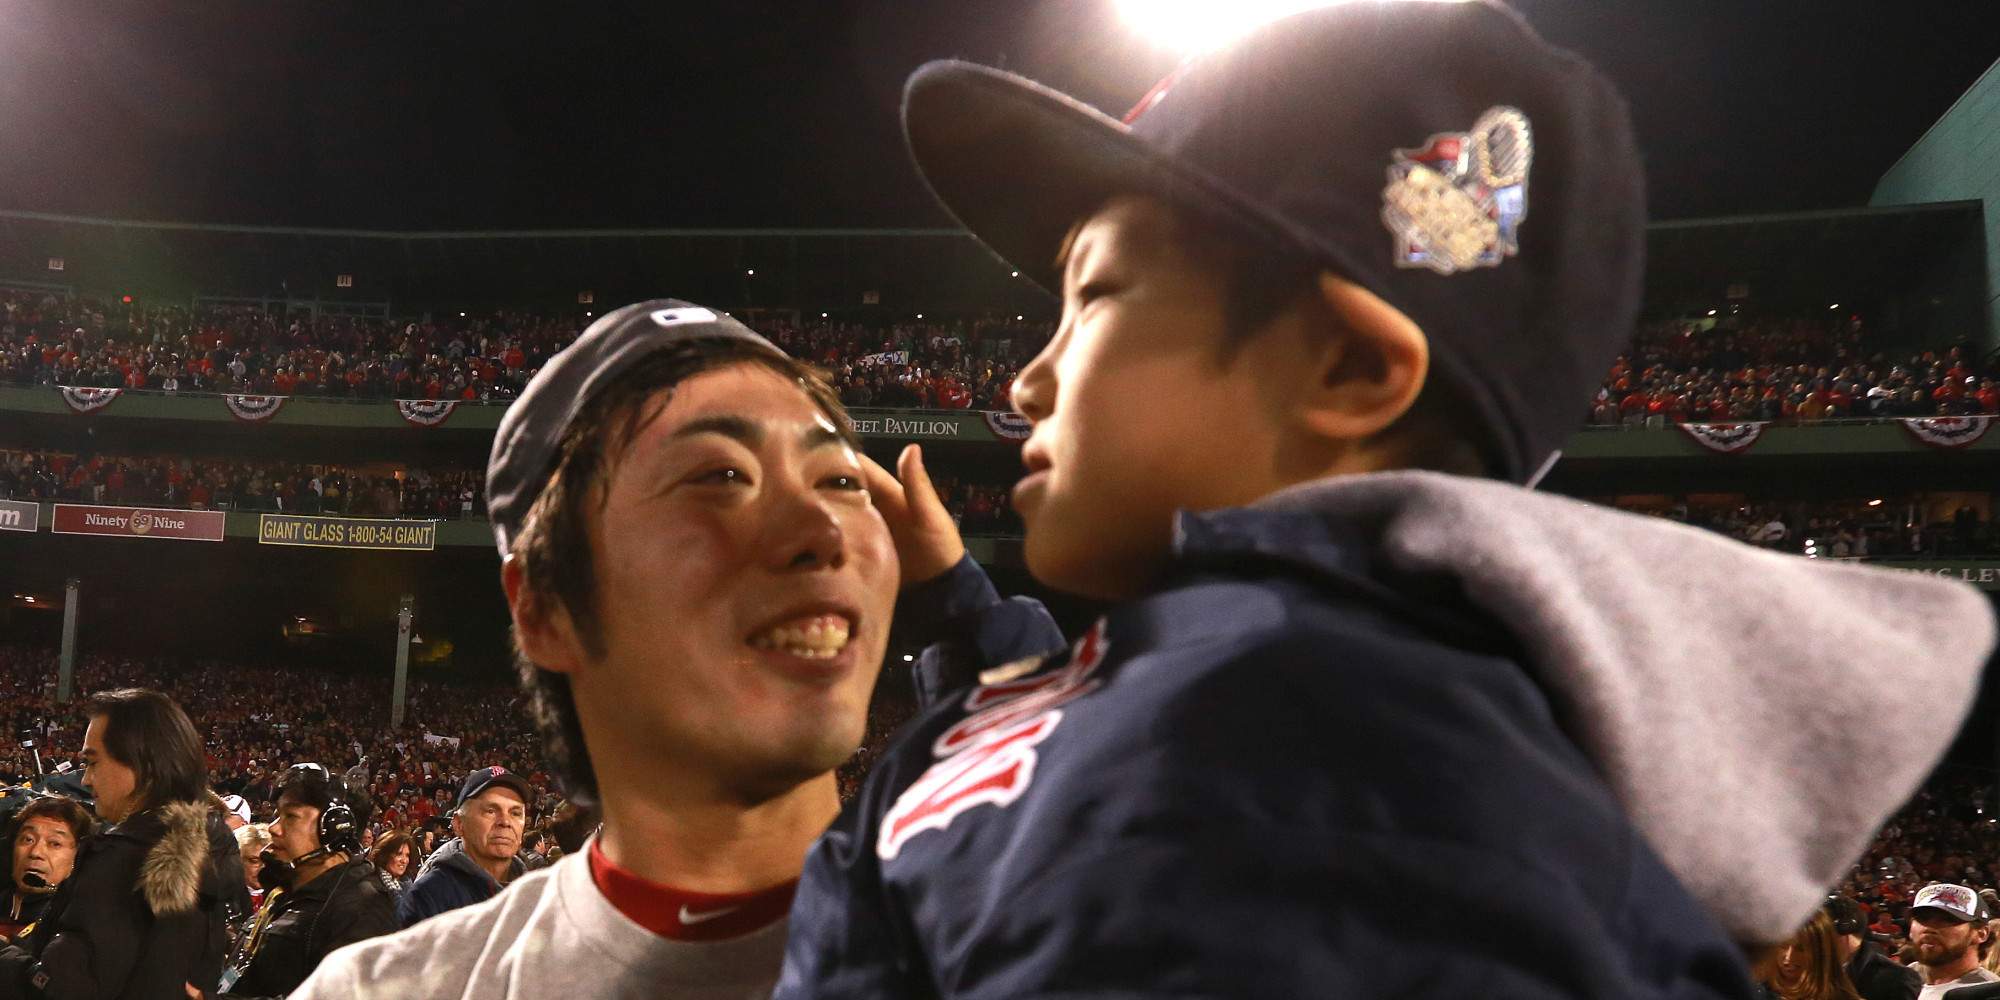 Kaz Uehara Koji Uehara S Son Gives Adorable Interview After Red Sox